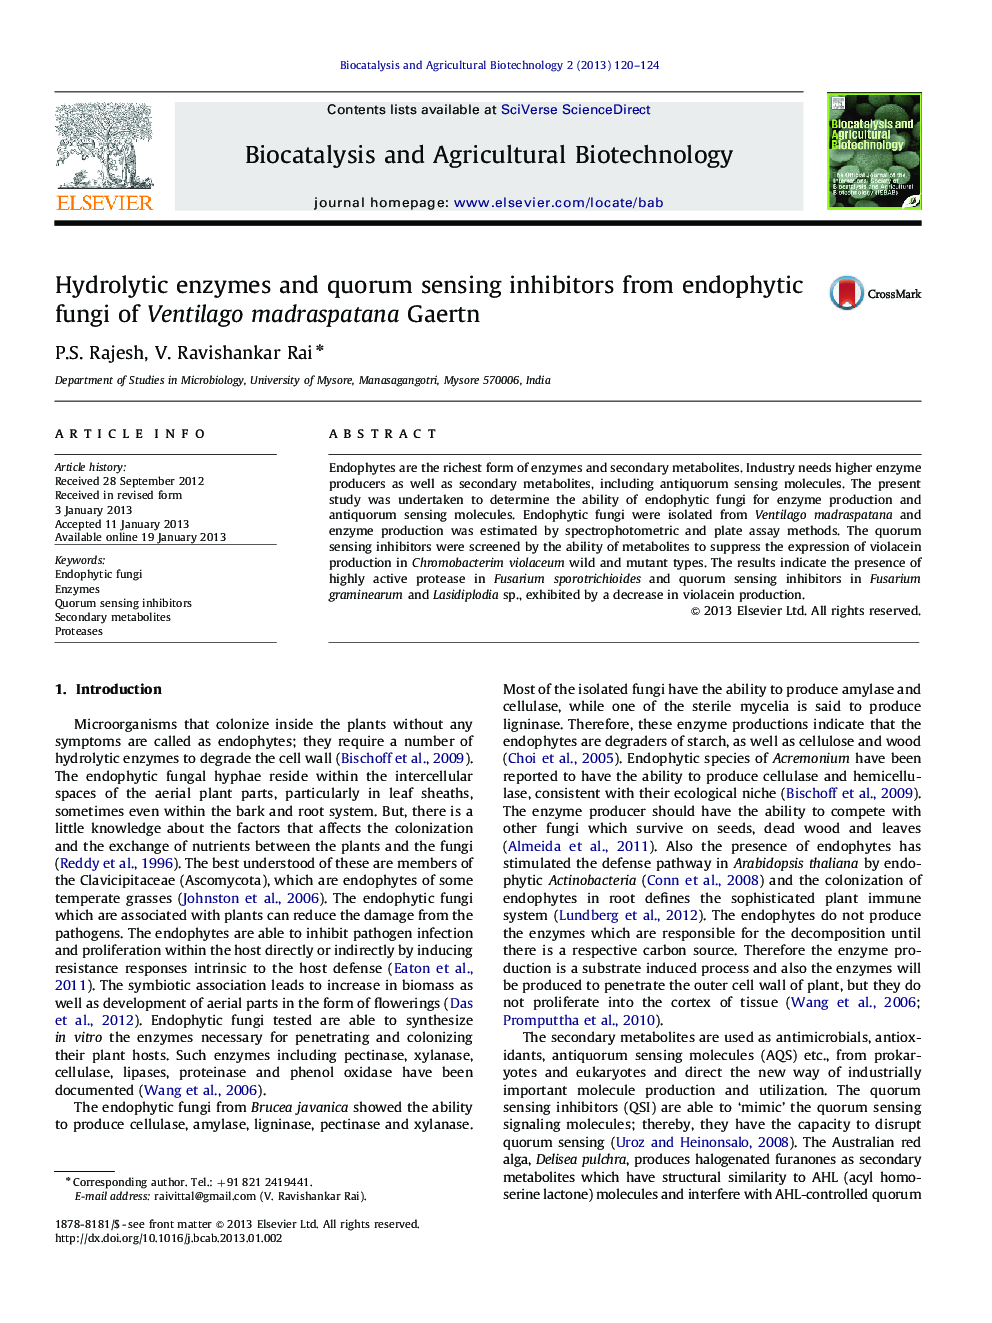 Hydrolytic enzymes and quorum sensing inhibitors from endophytic fungi of Ventilago madraspatana Gaertn